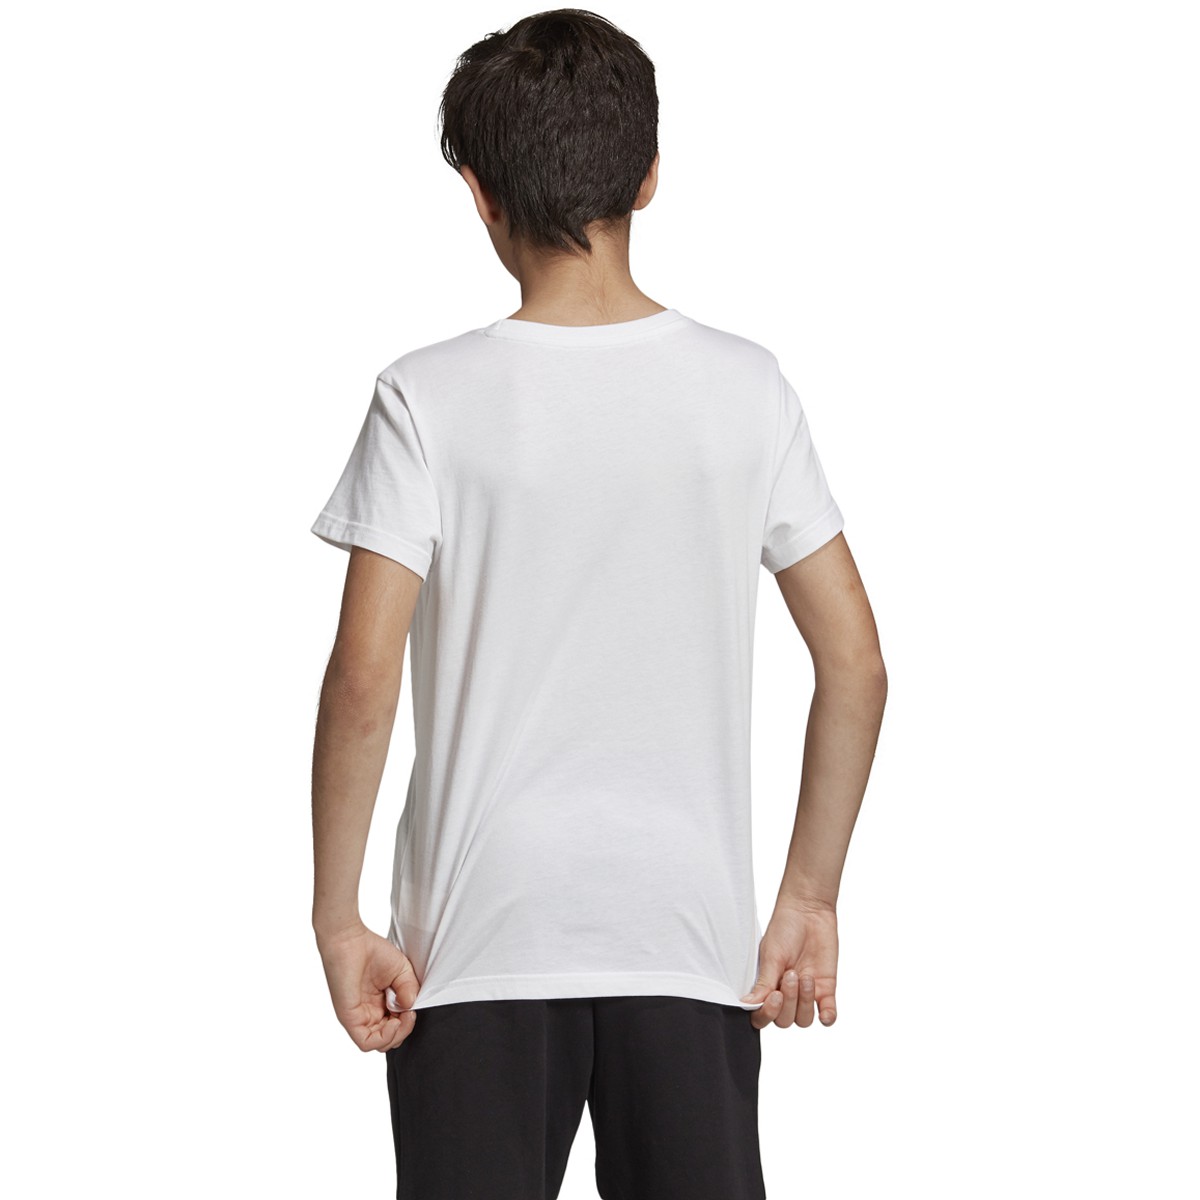 Adidas Originals Trefoil Kids T-Shirt White-Black dv2904 | eBay